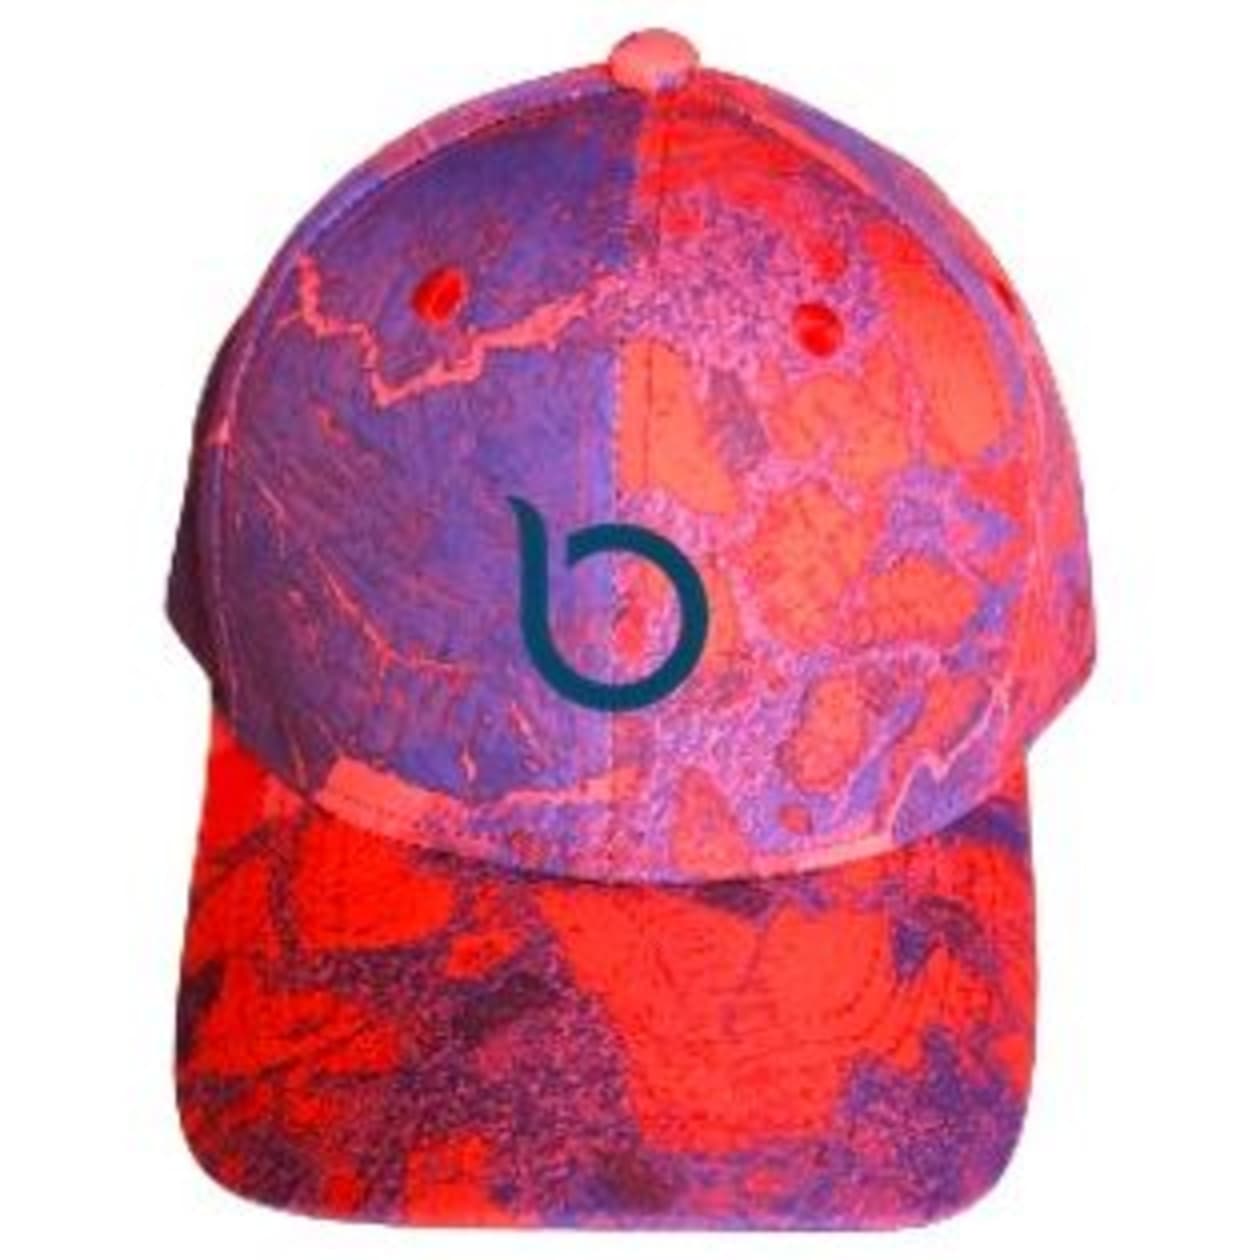 Brella 2015 Red Blue Unisex Waterproof Hat